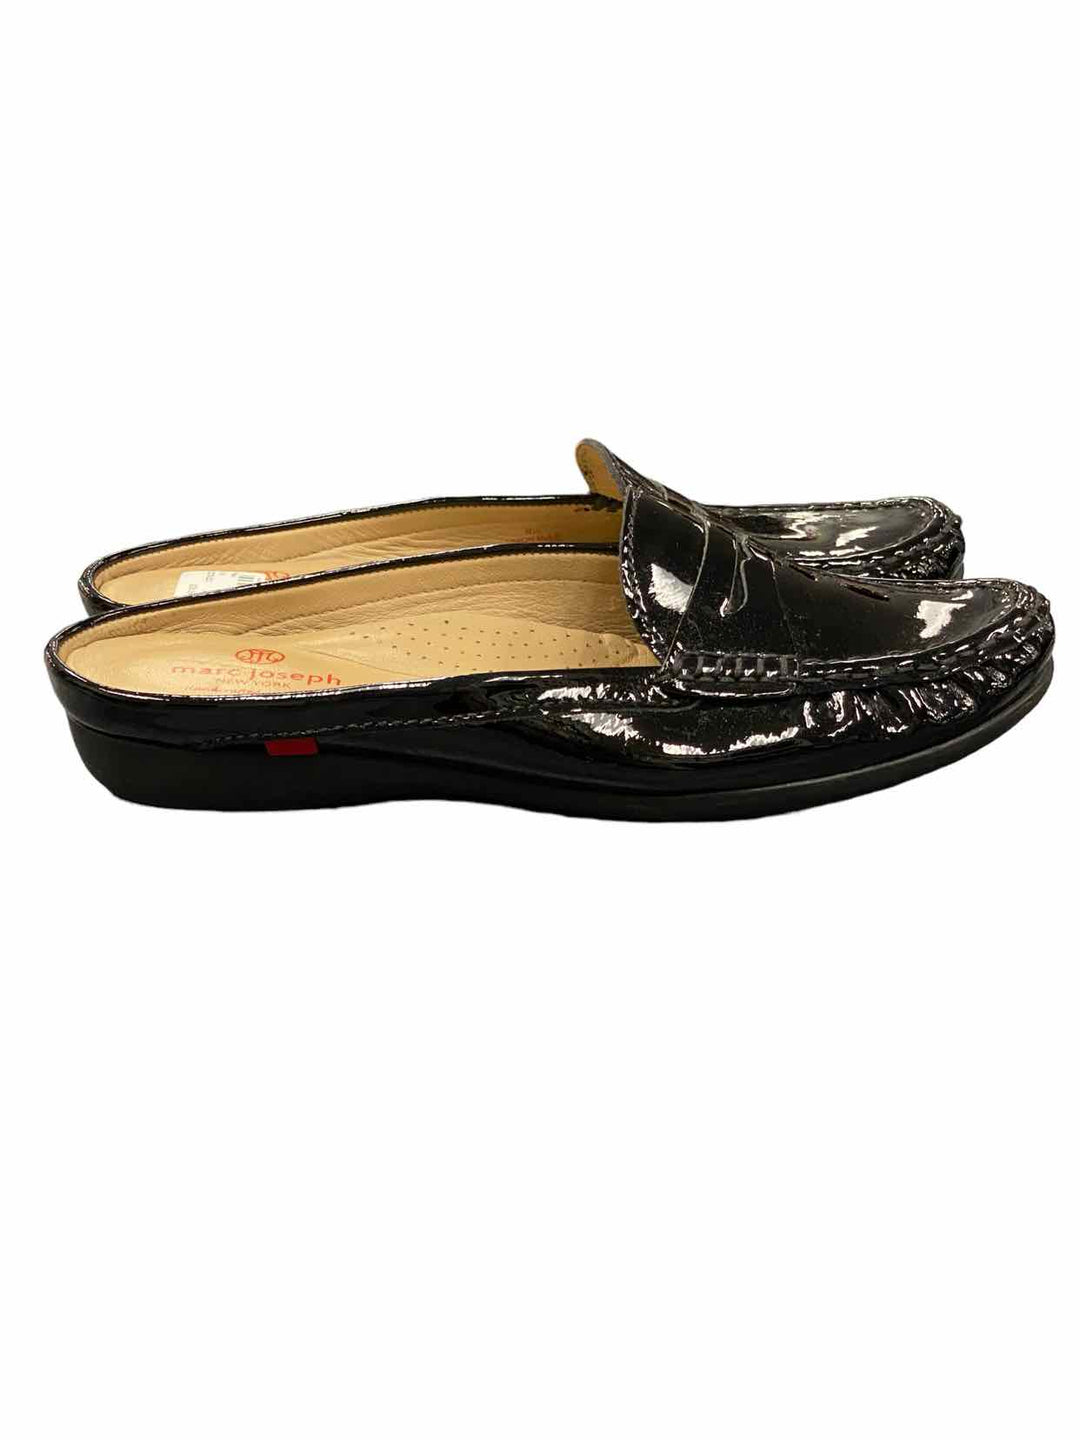 Marc Joseph Shoe Size 9.5 Black Leather Flats